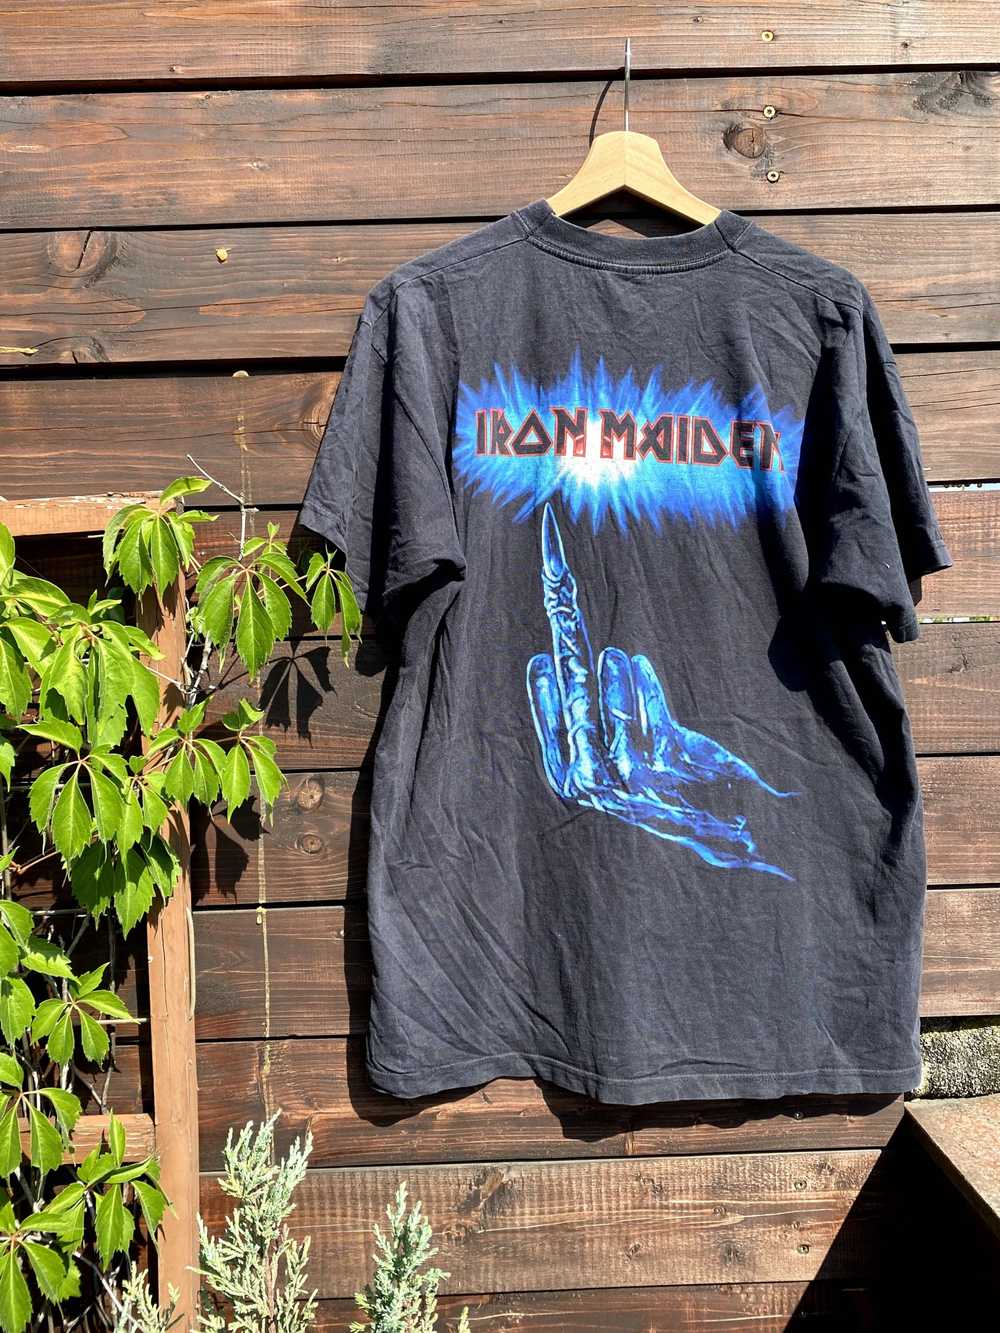 Vintage 2002 iron maiden t-shirt - image 2